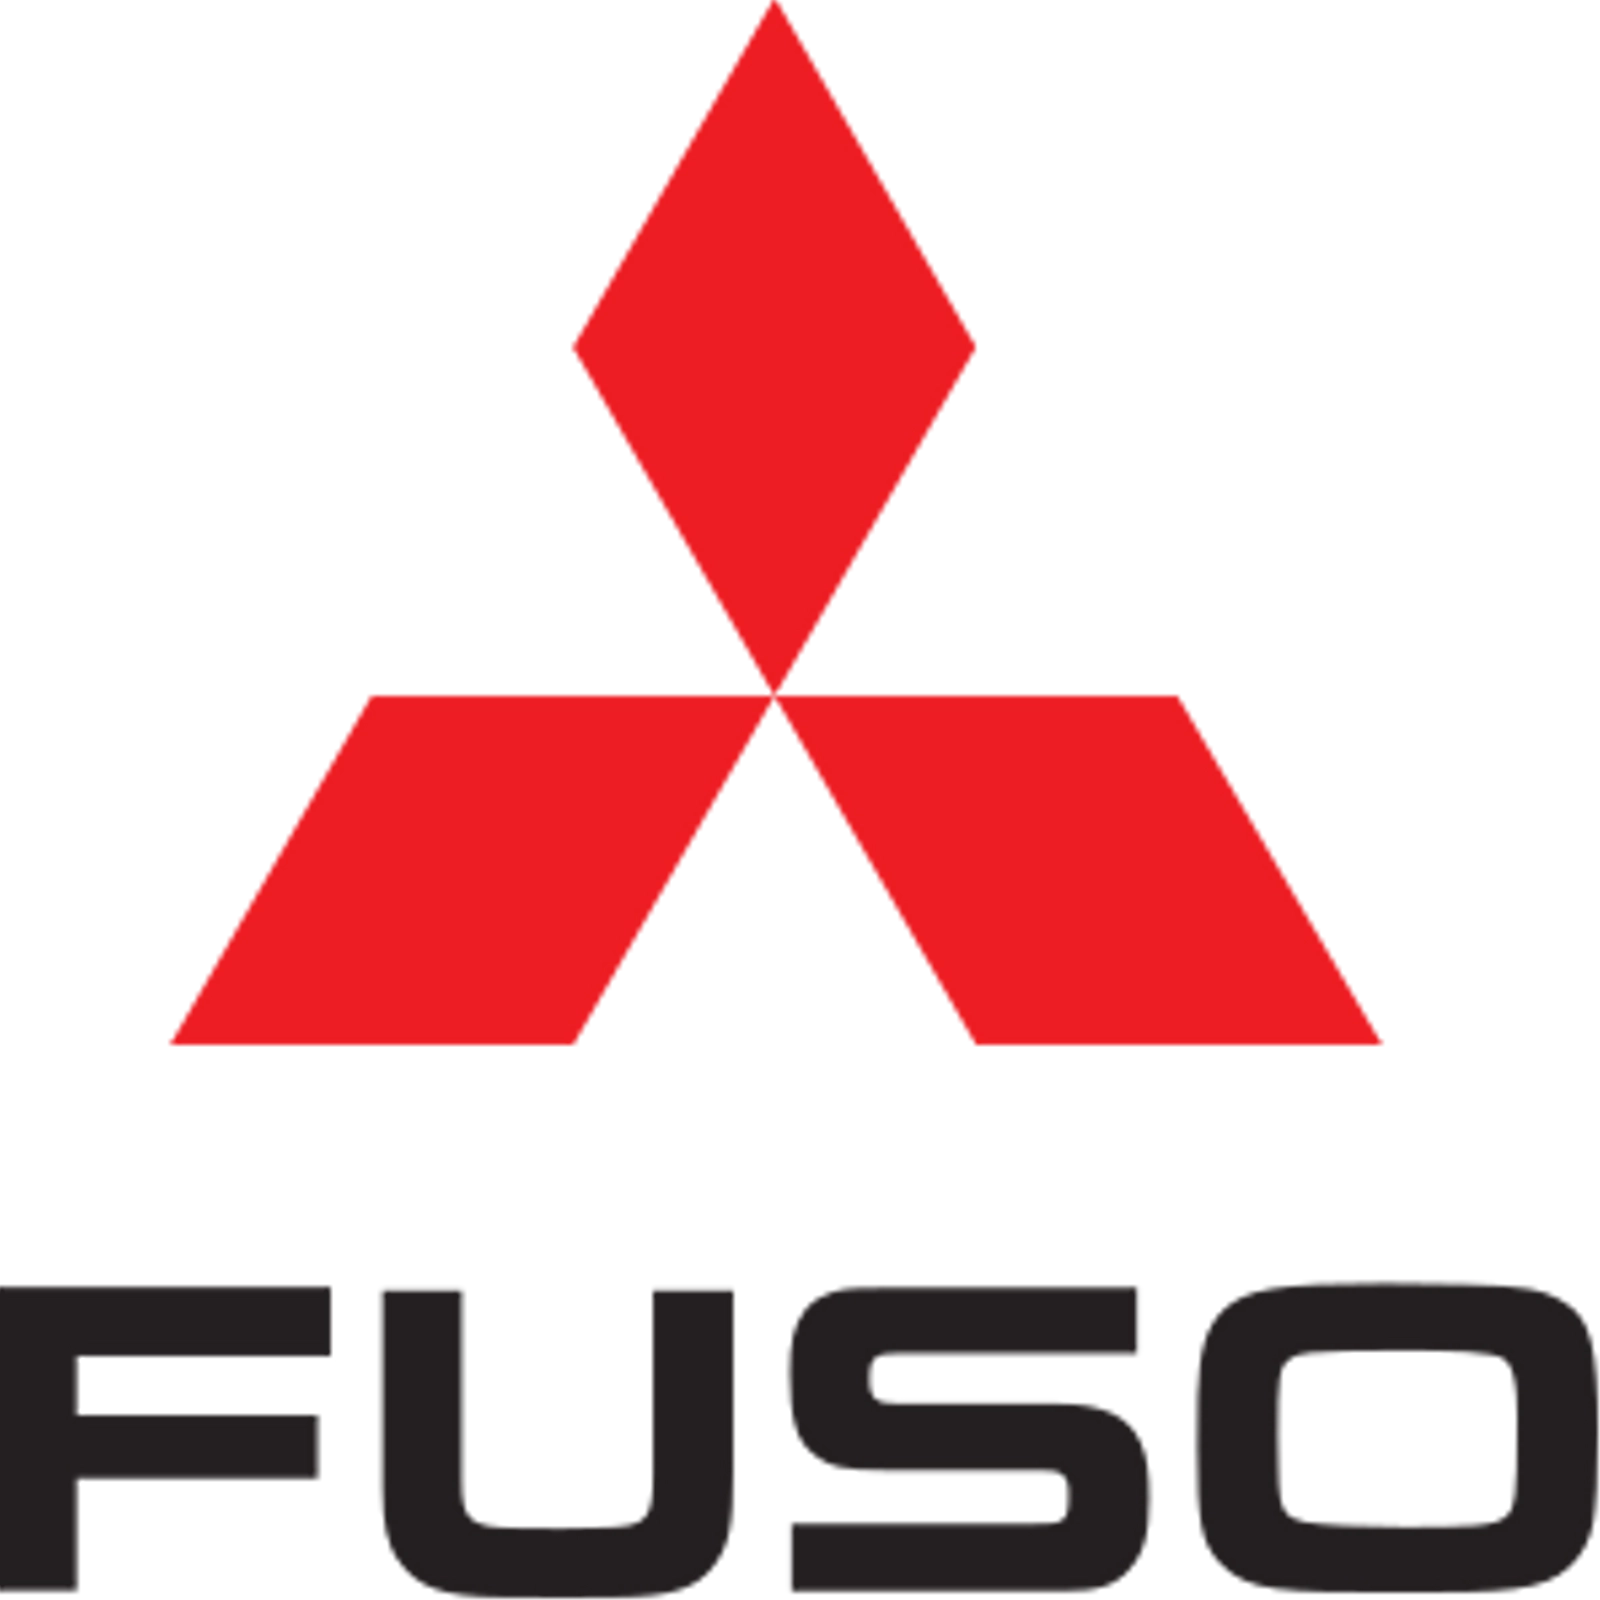 Логотип FUSO